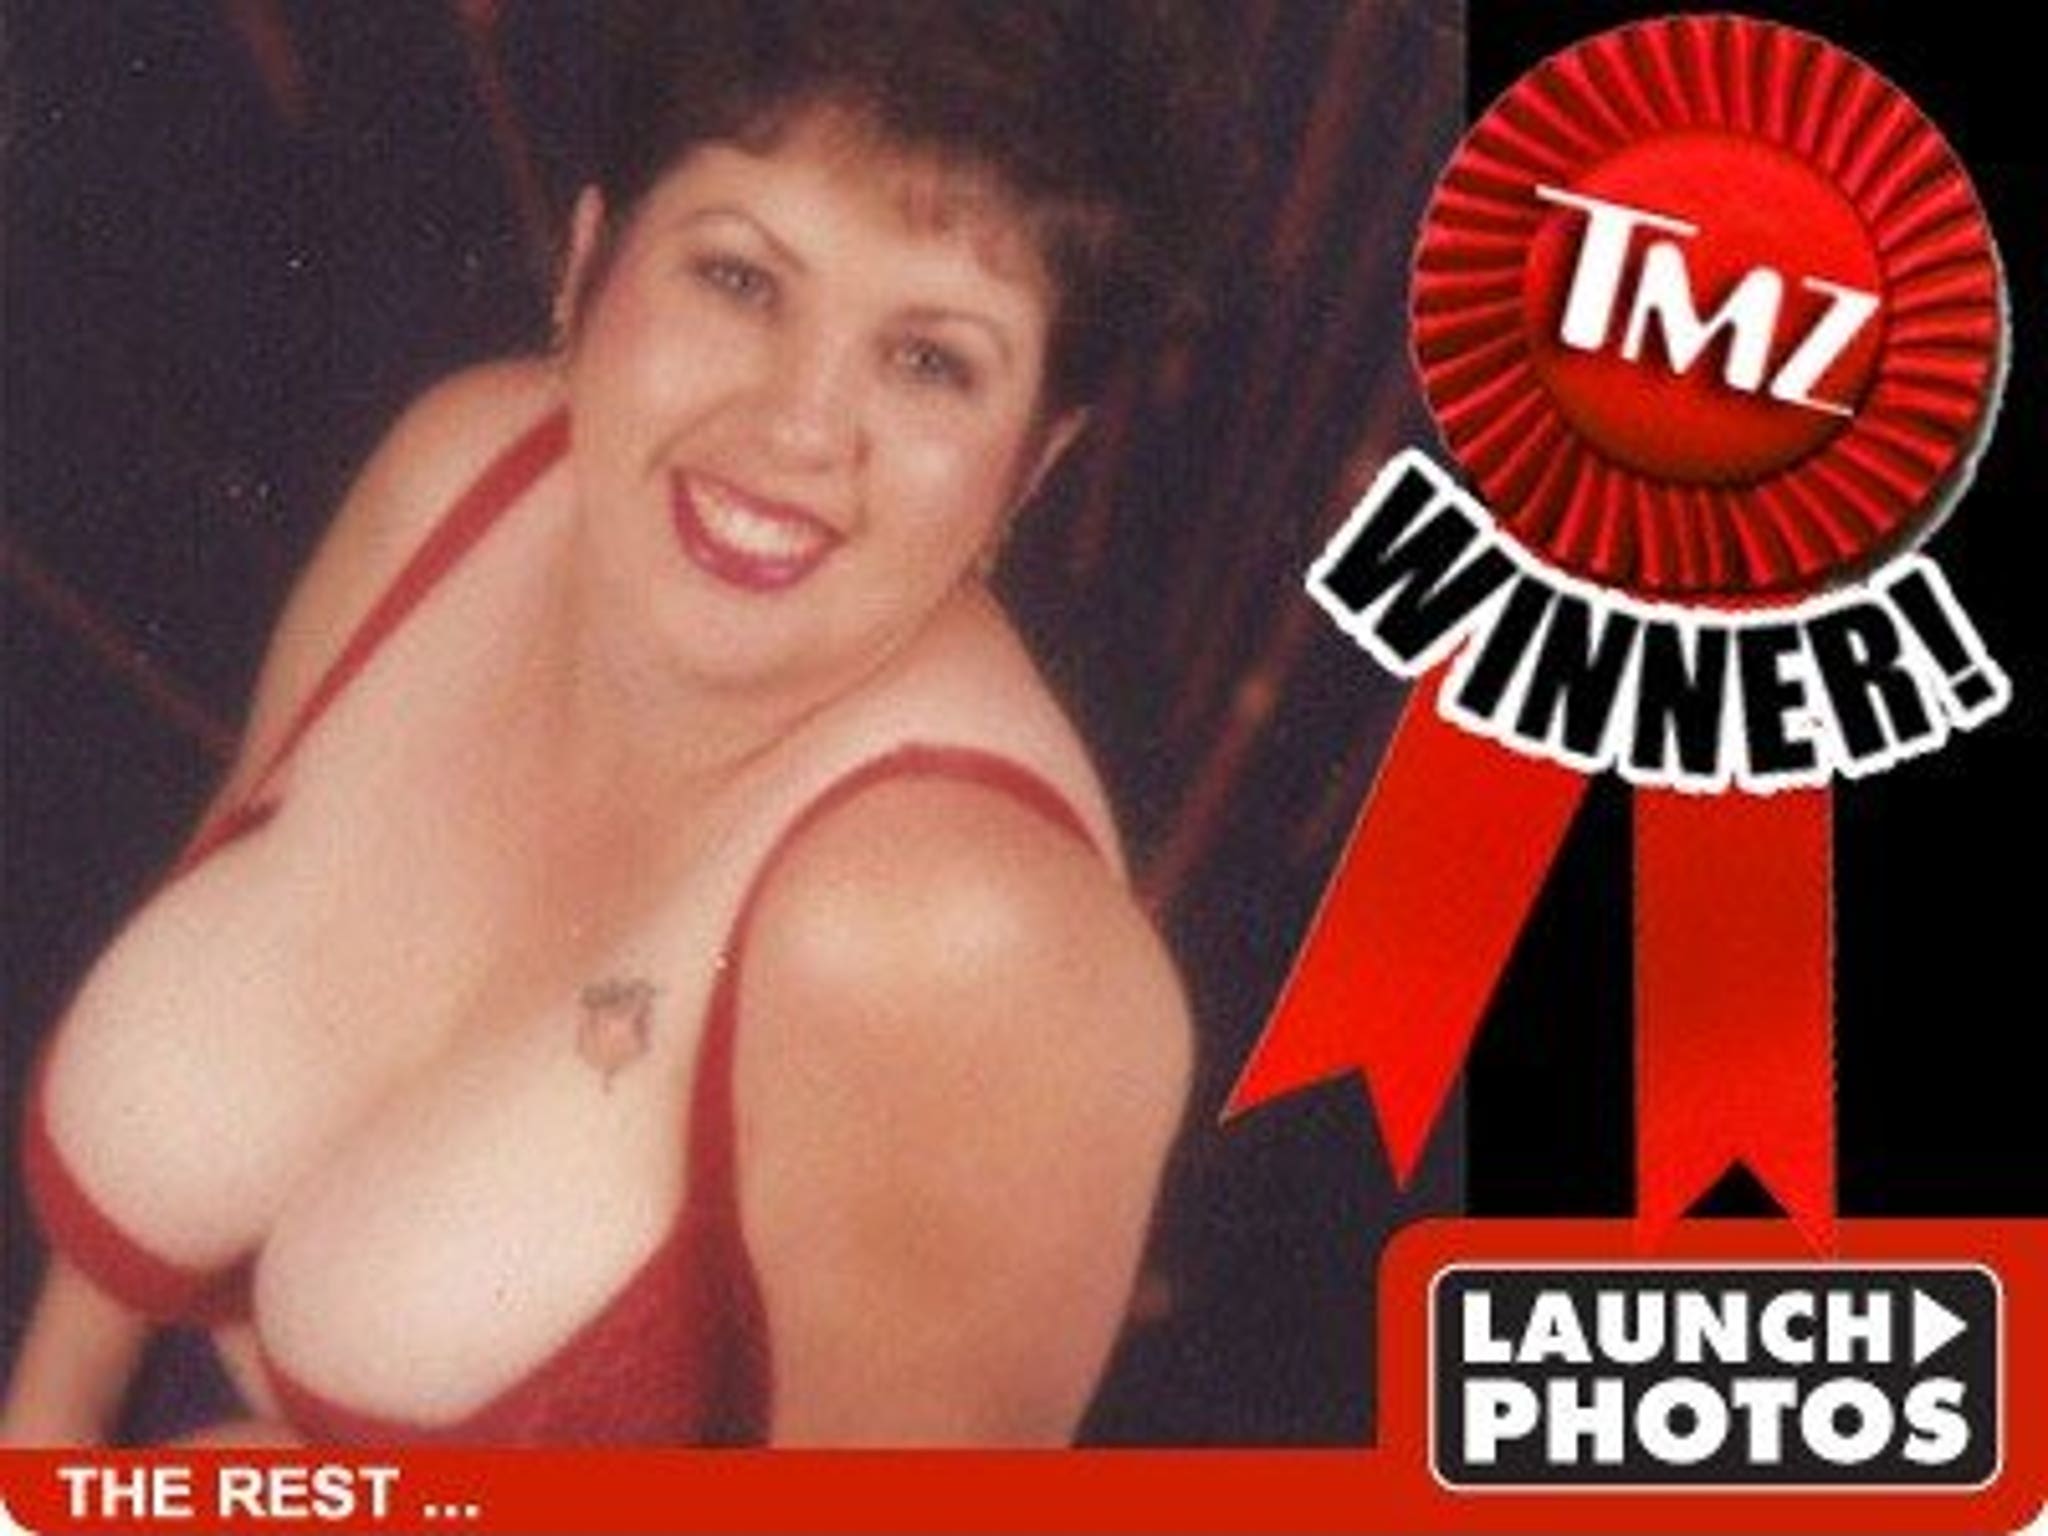 TMZ's Best Breasts Contest